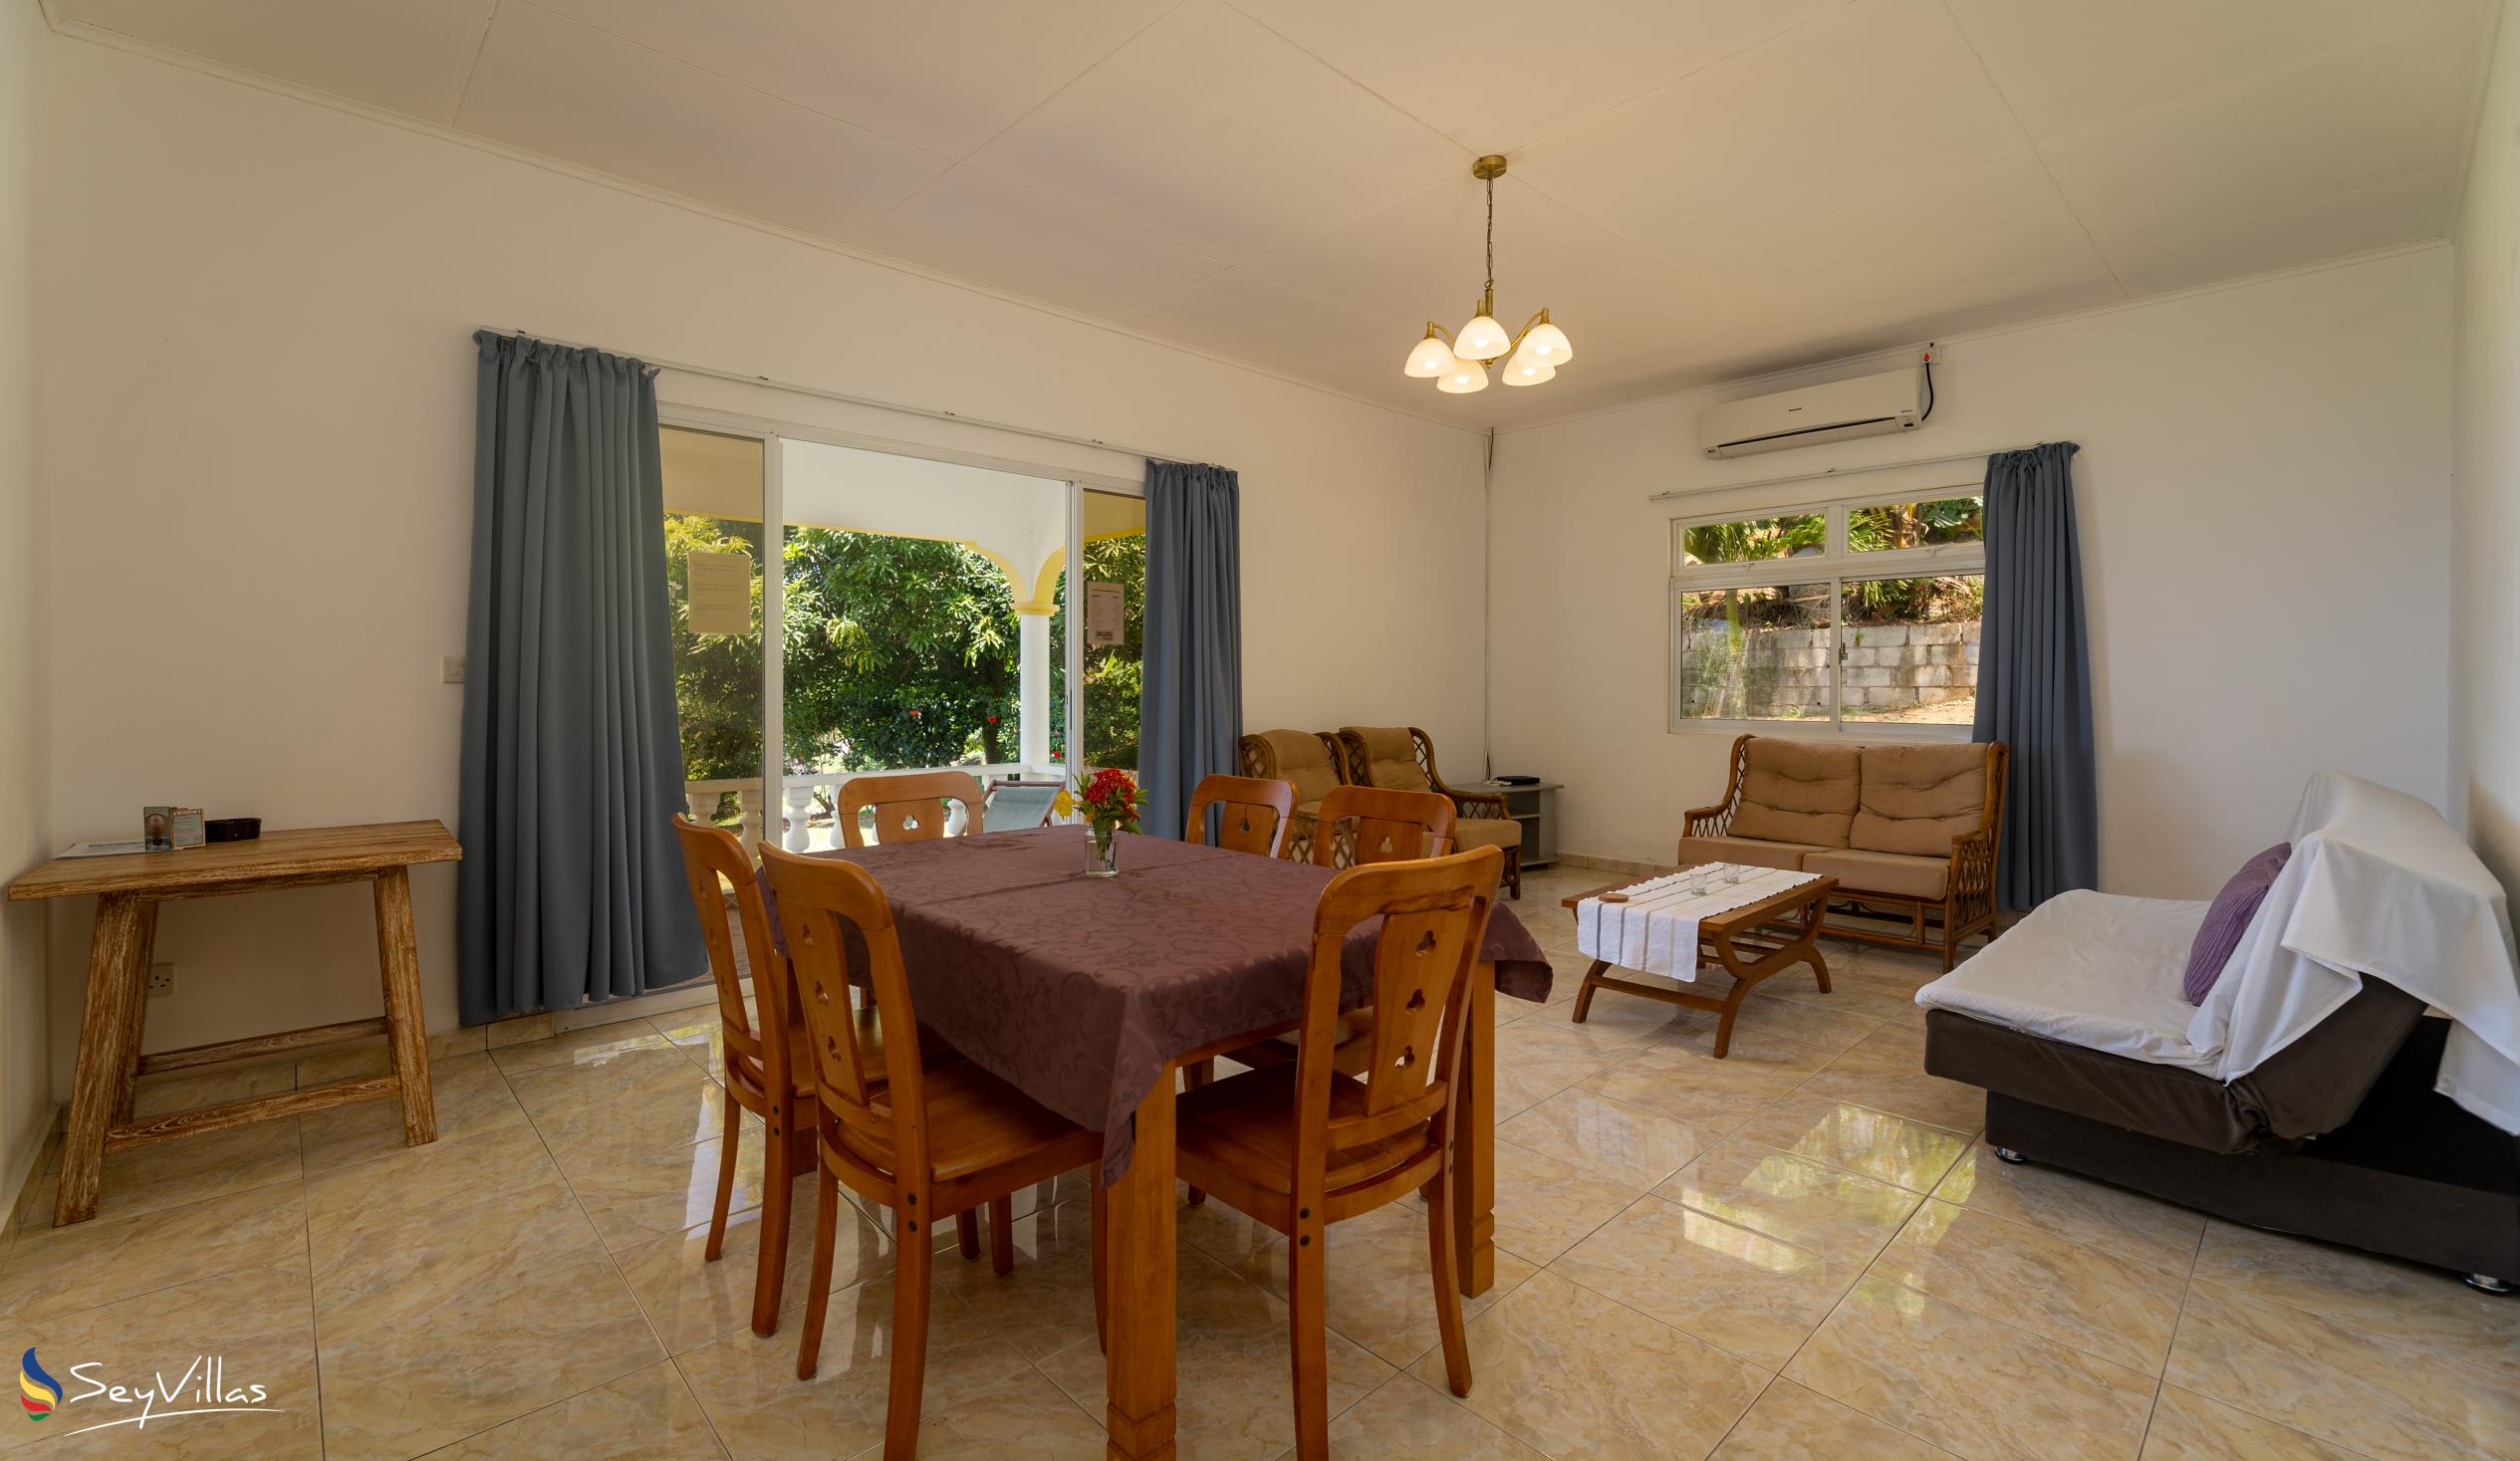 Foto 81: Maison Marikel - Villa mit 2 Schlafzimmern - Mahé (Seychellen)